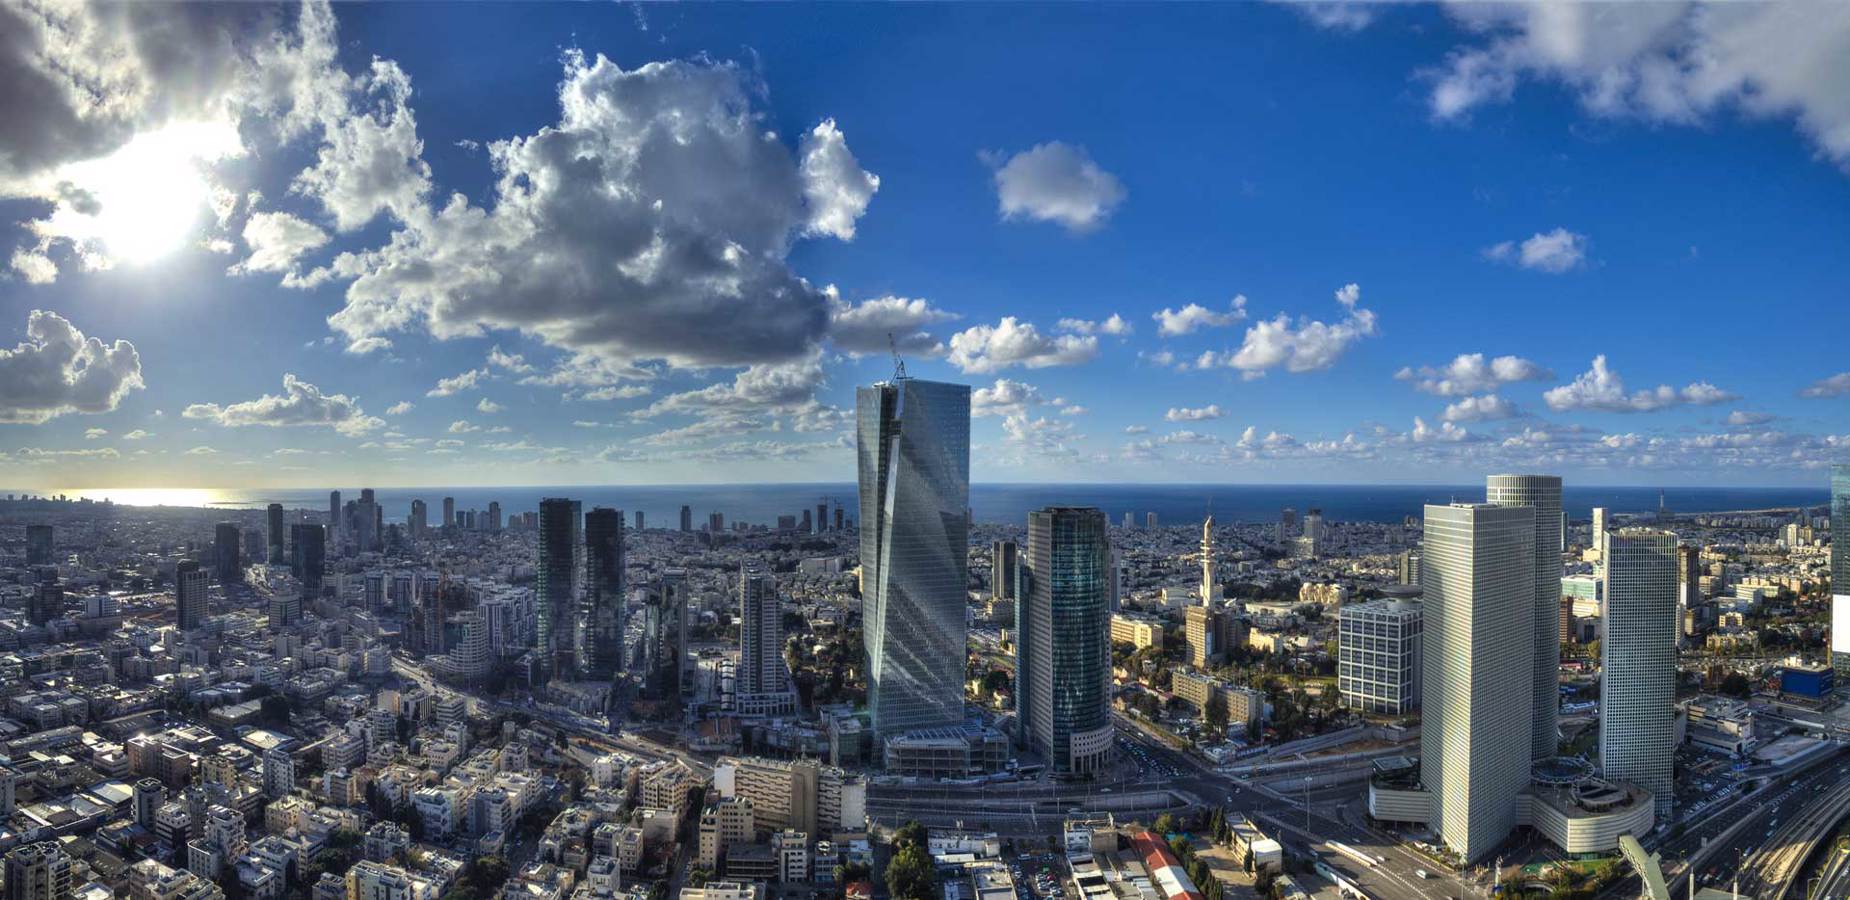 Aerial view of Tel Aviv.